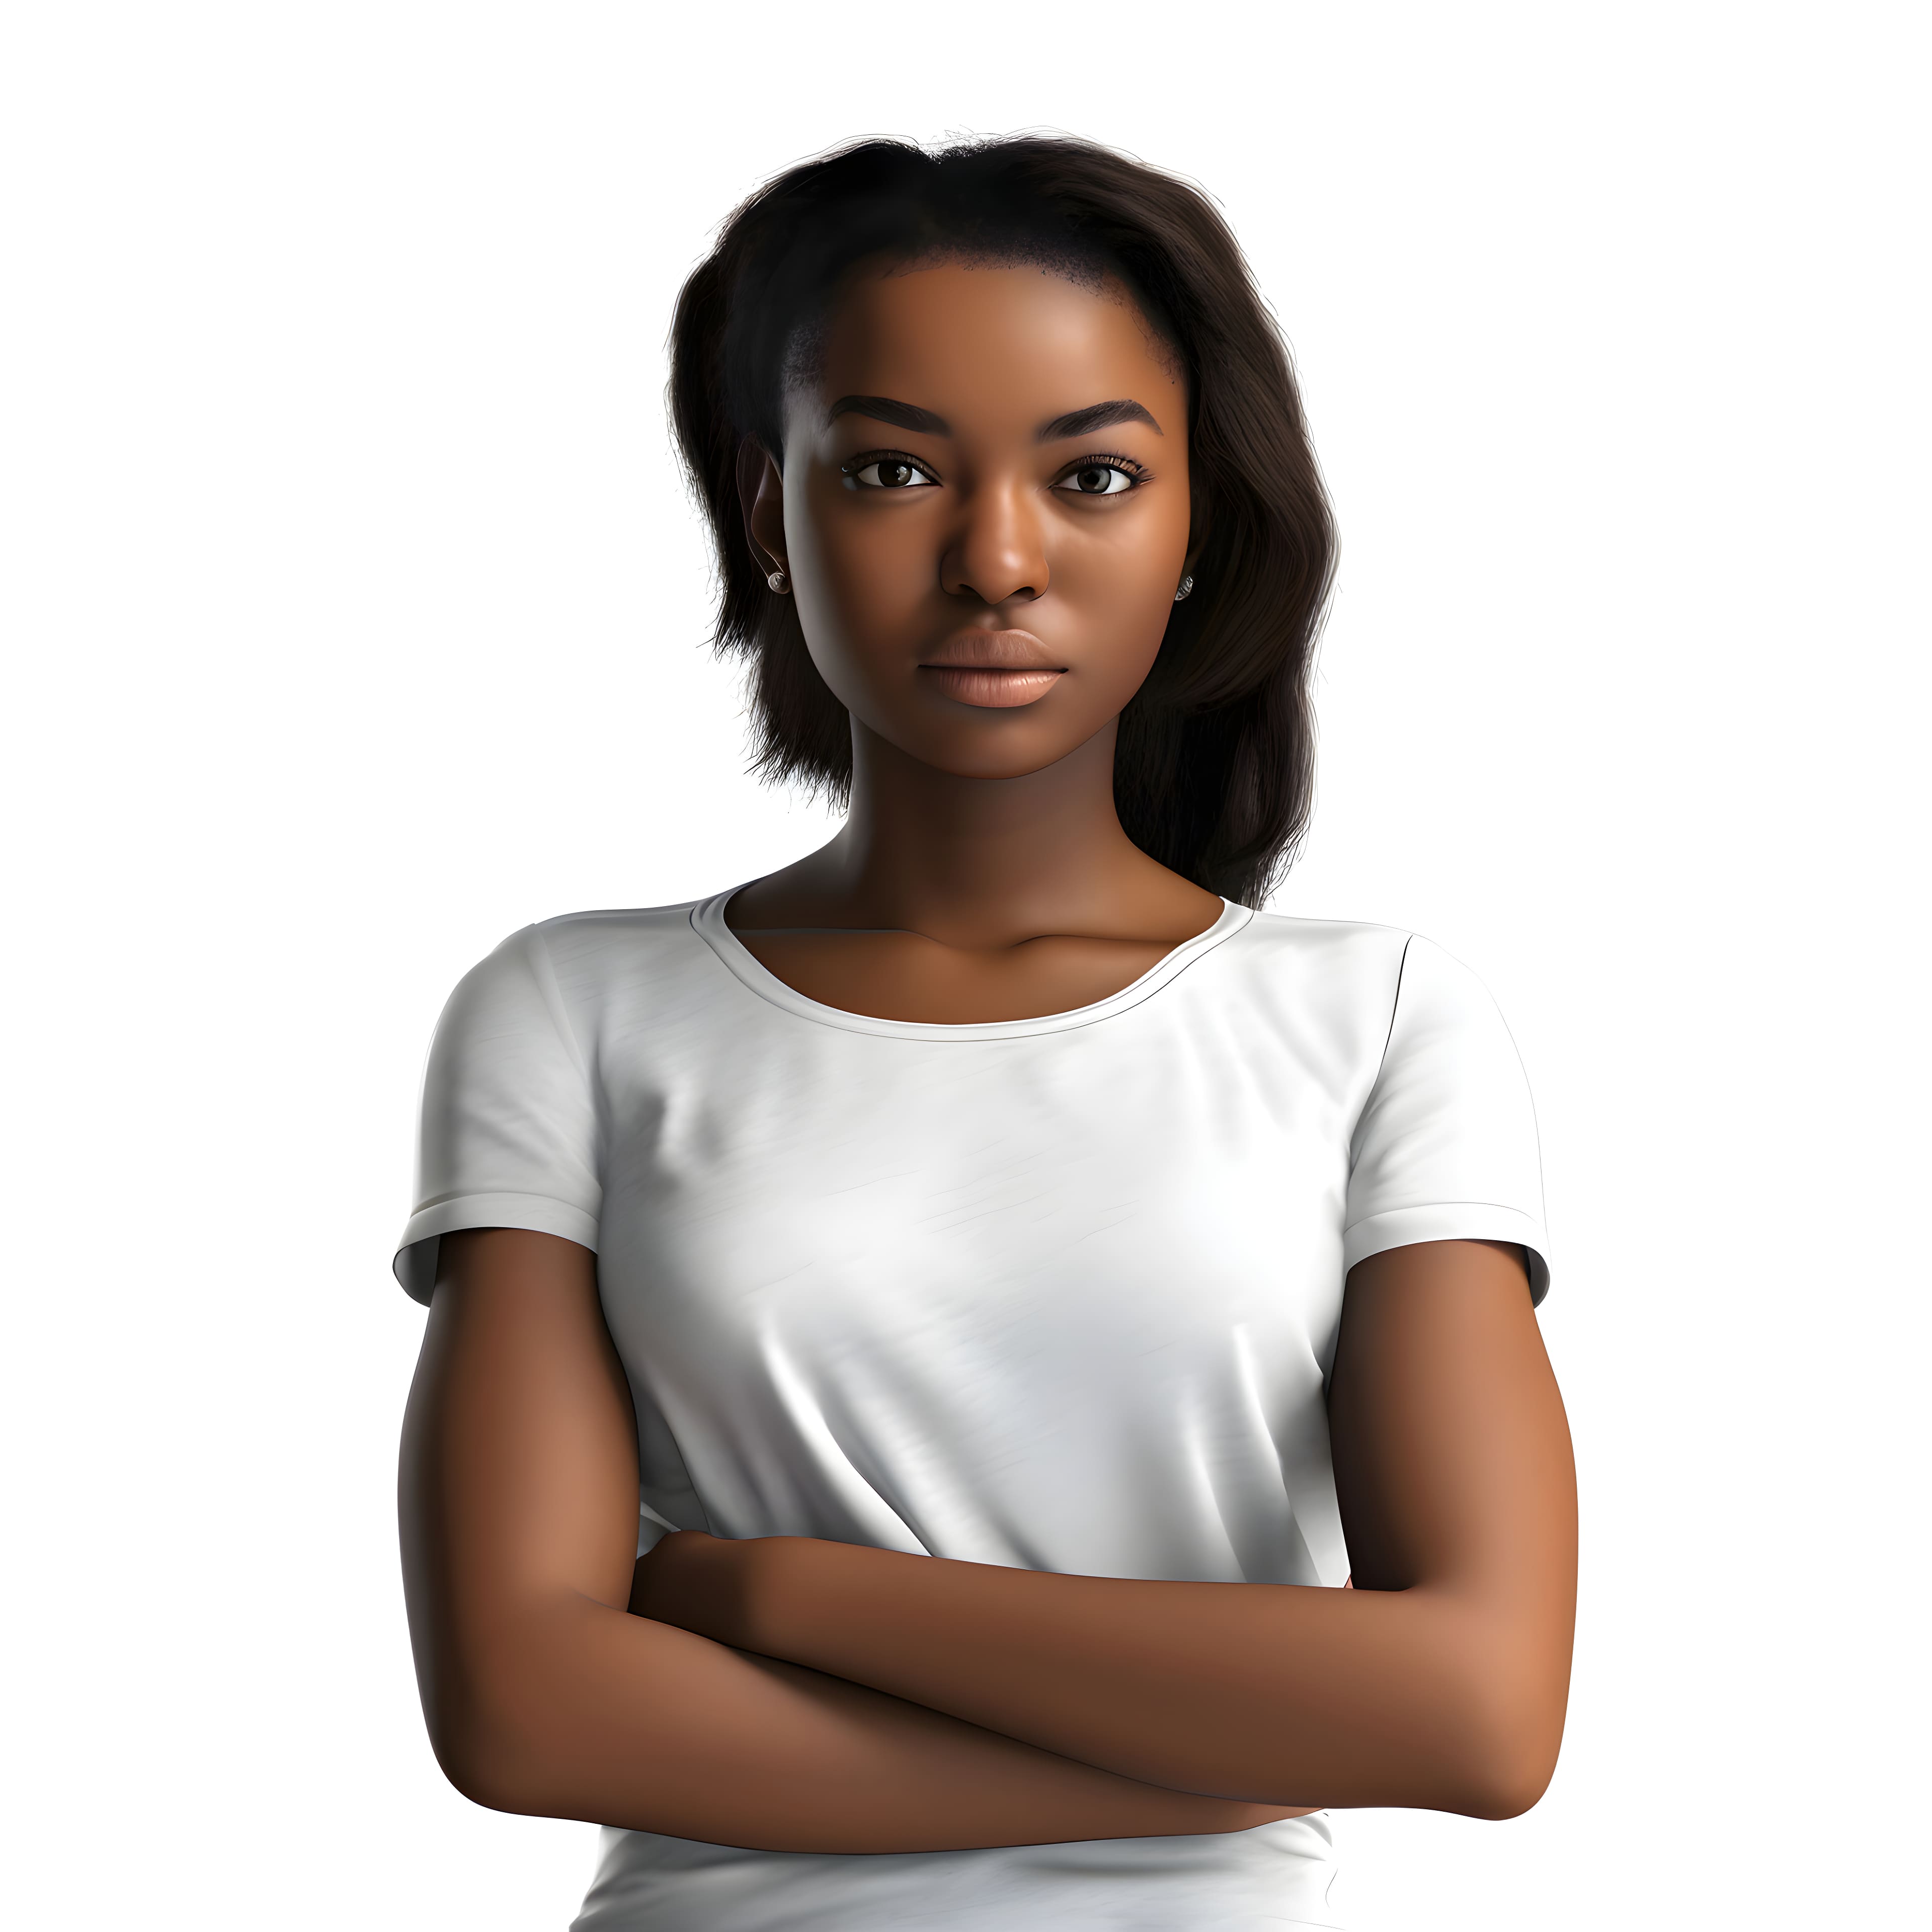 Female Black Student